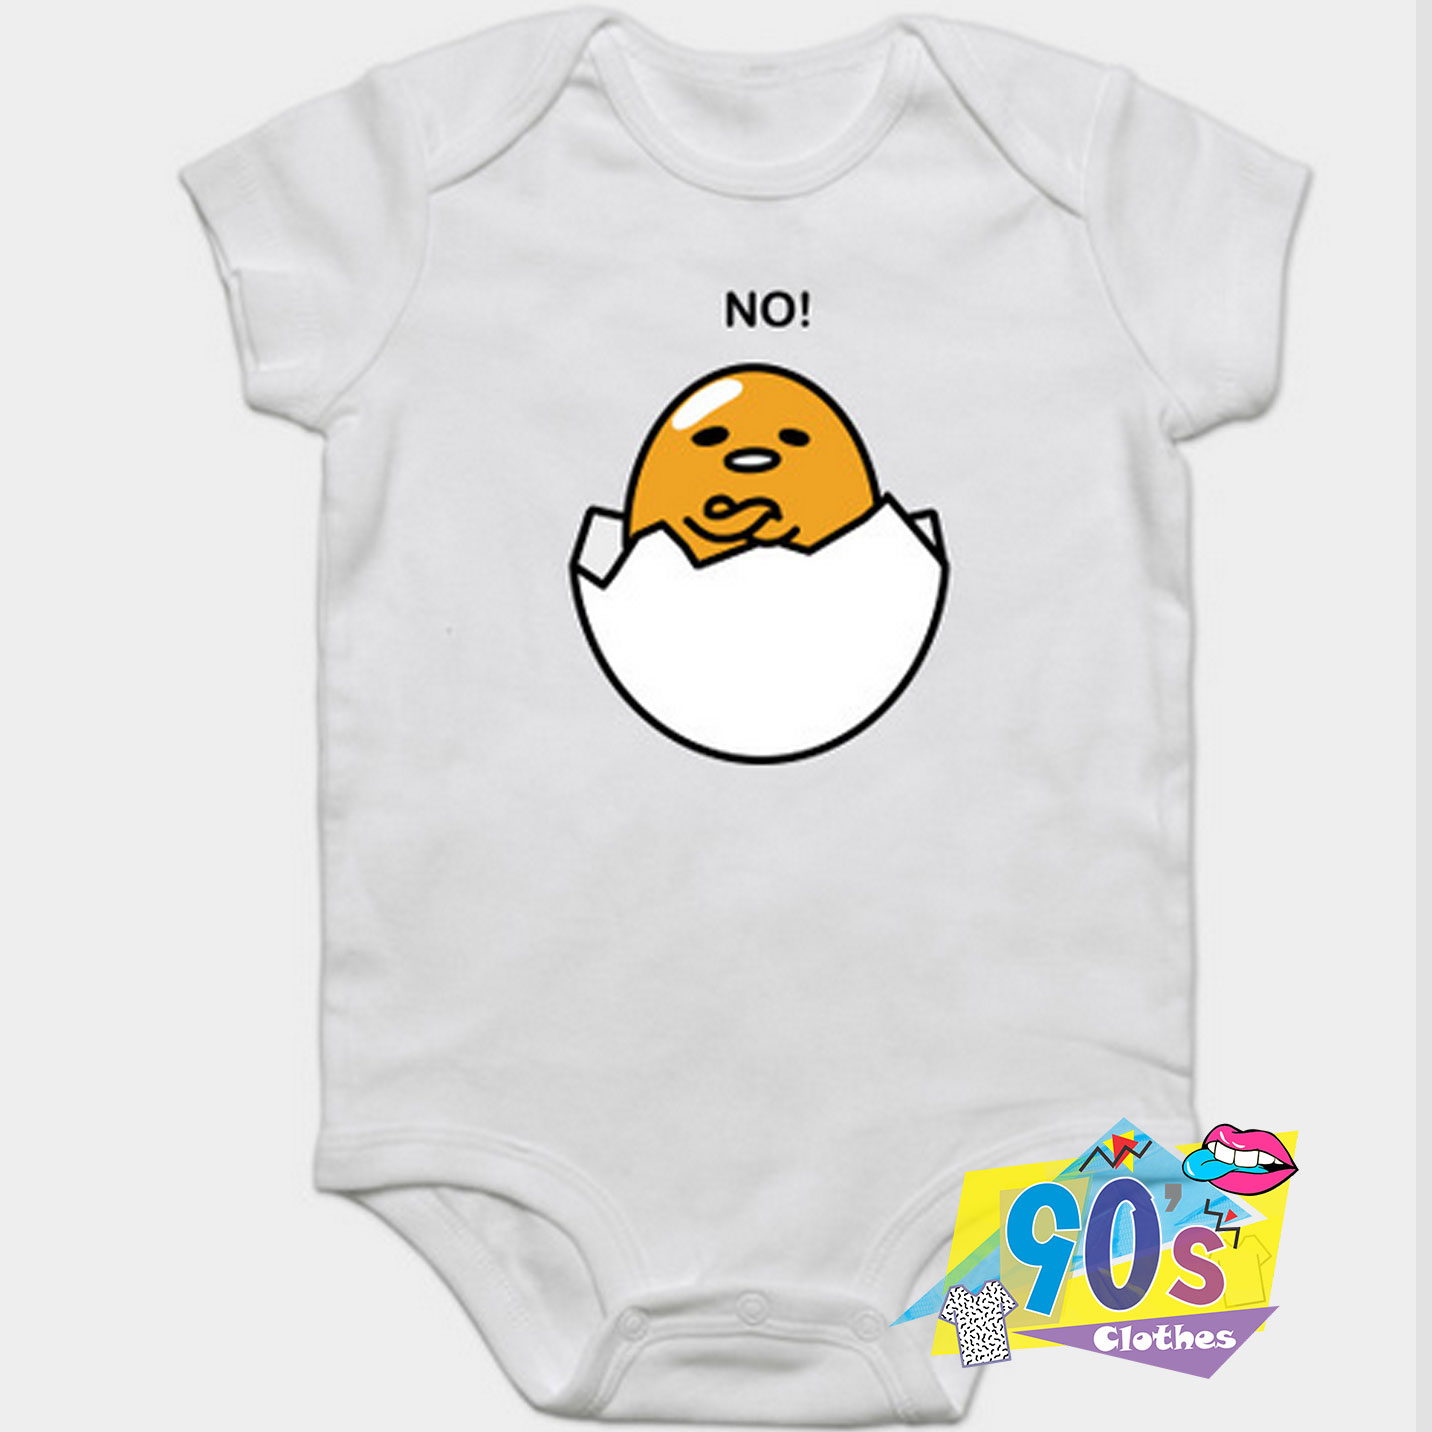 egg baby clothes